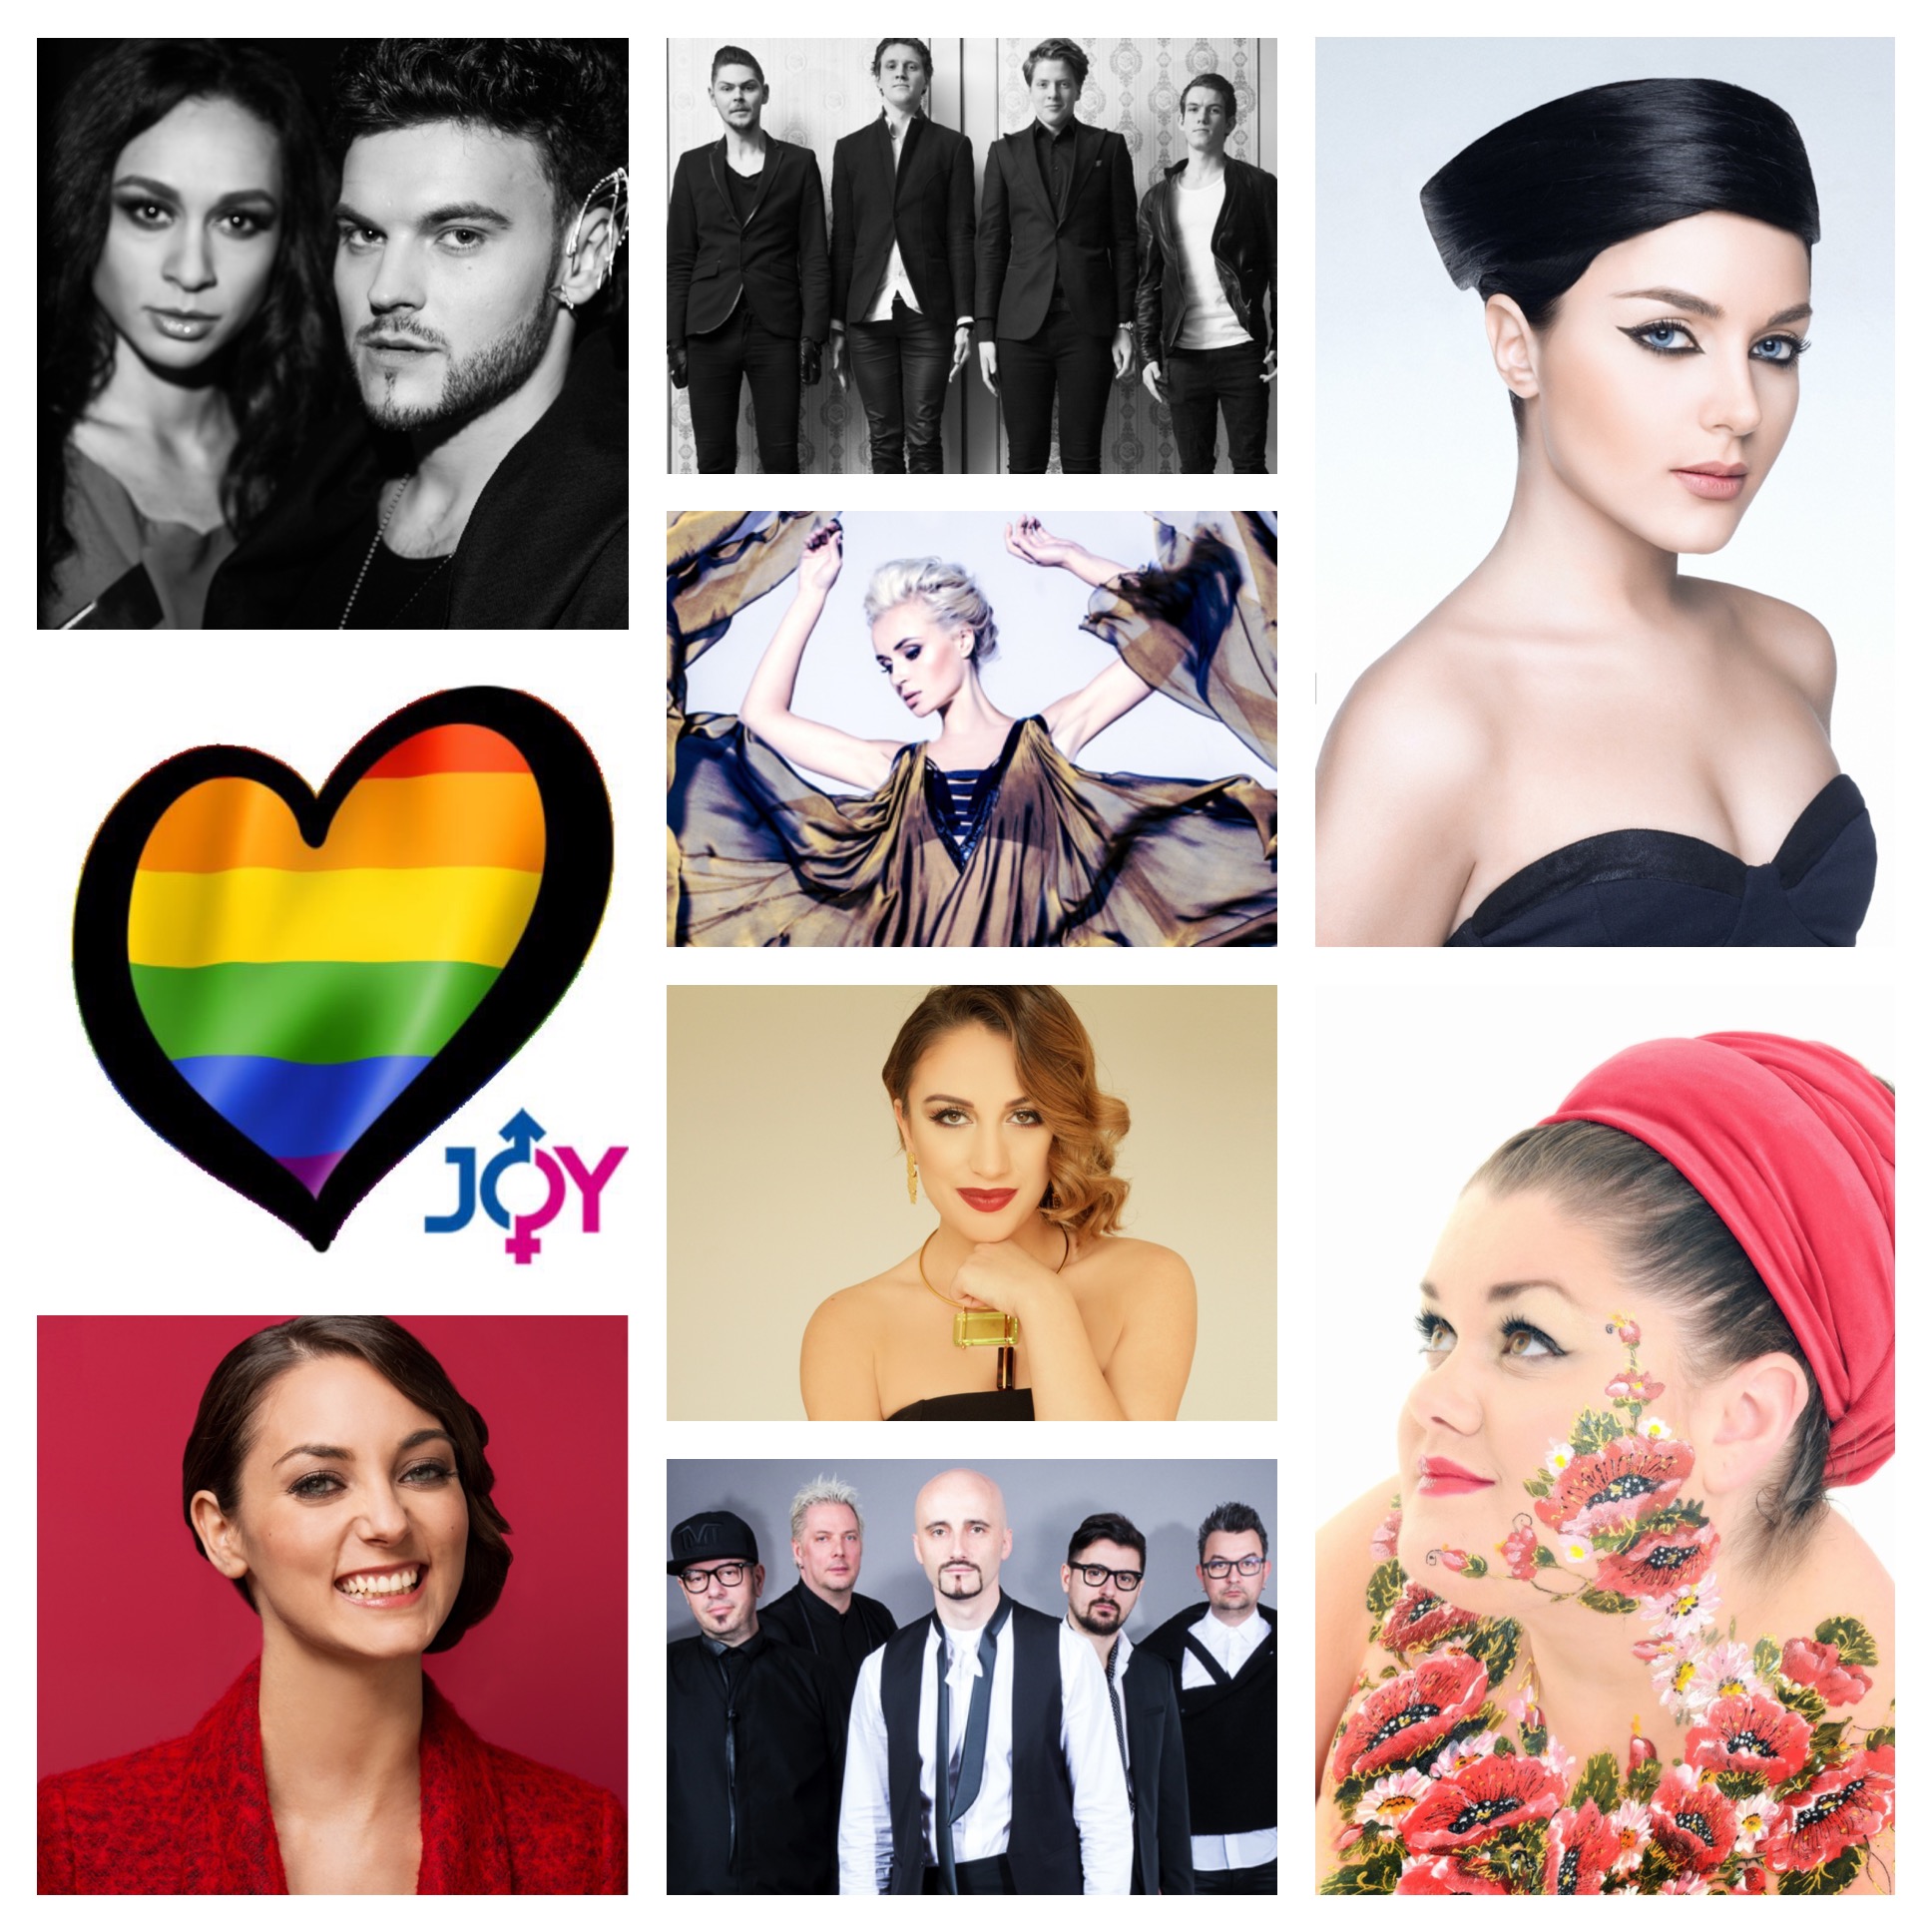 Eurovision 2015 Preview: Semi Final 1, part 2